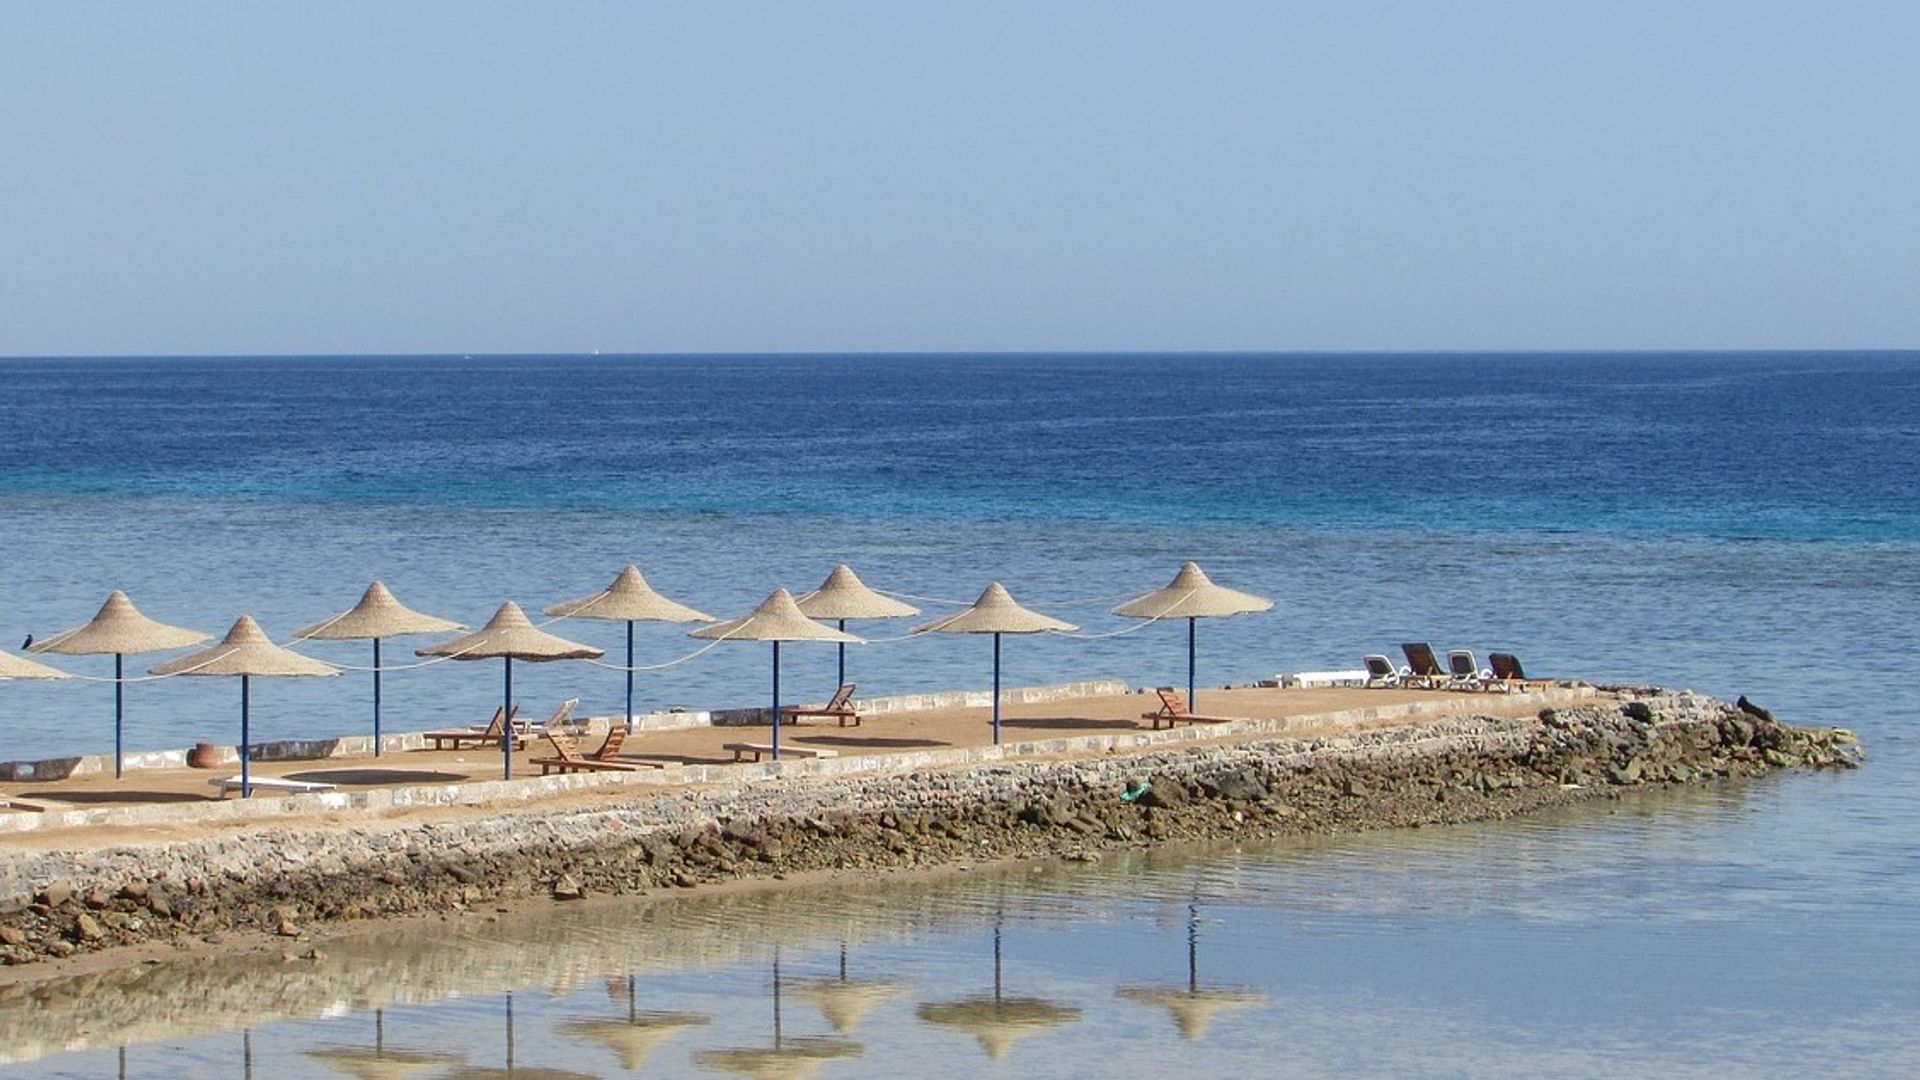 Sejur Cairo & plaja Hurghada, 10 zile - februarie 2022